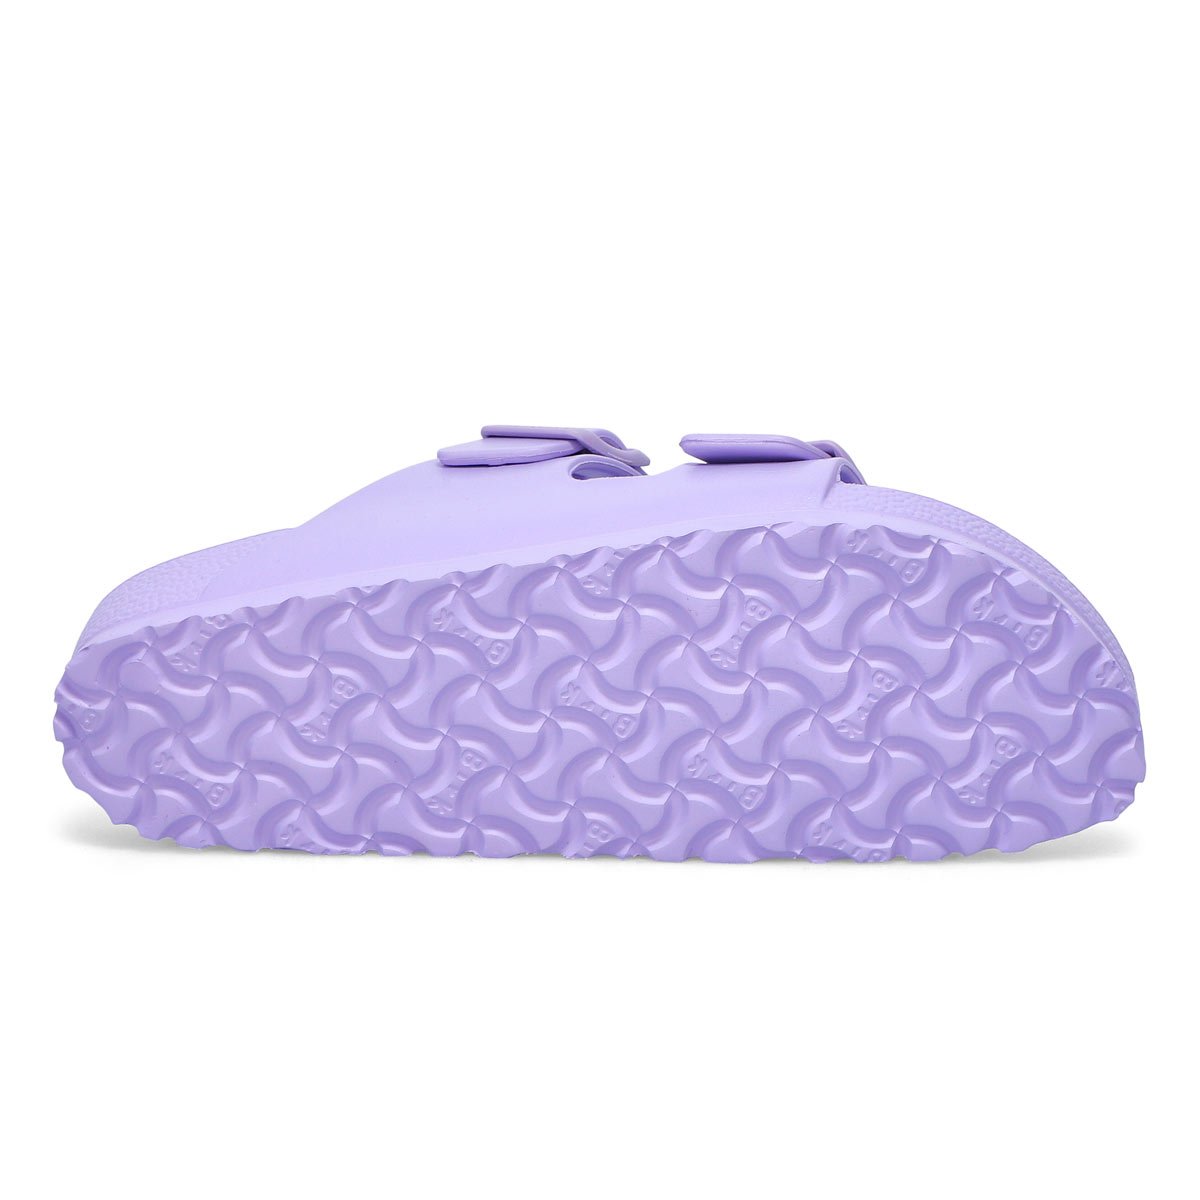 Women's Arizona EVA Sandal - Purple Fog